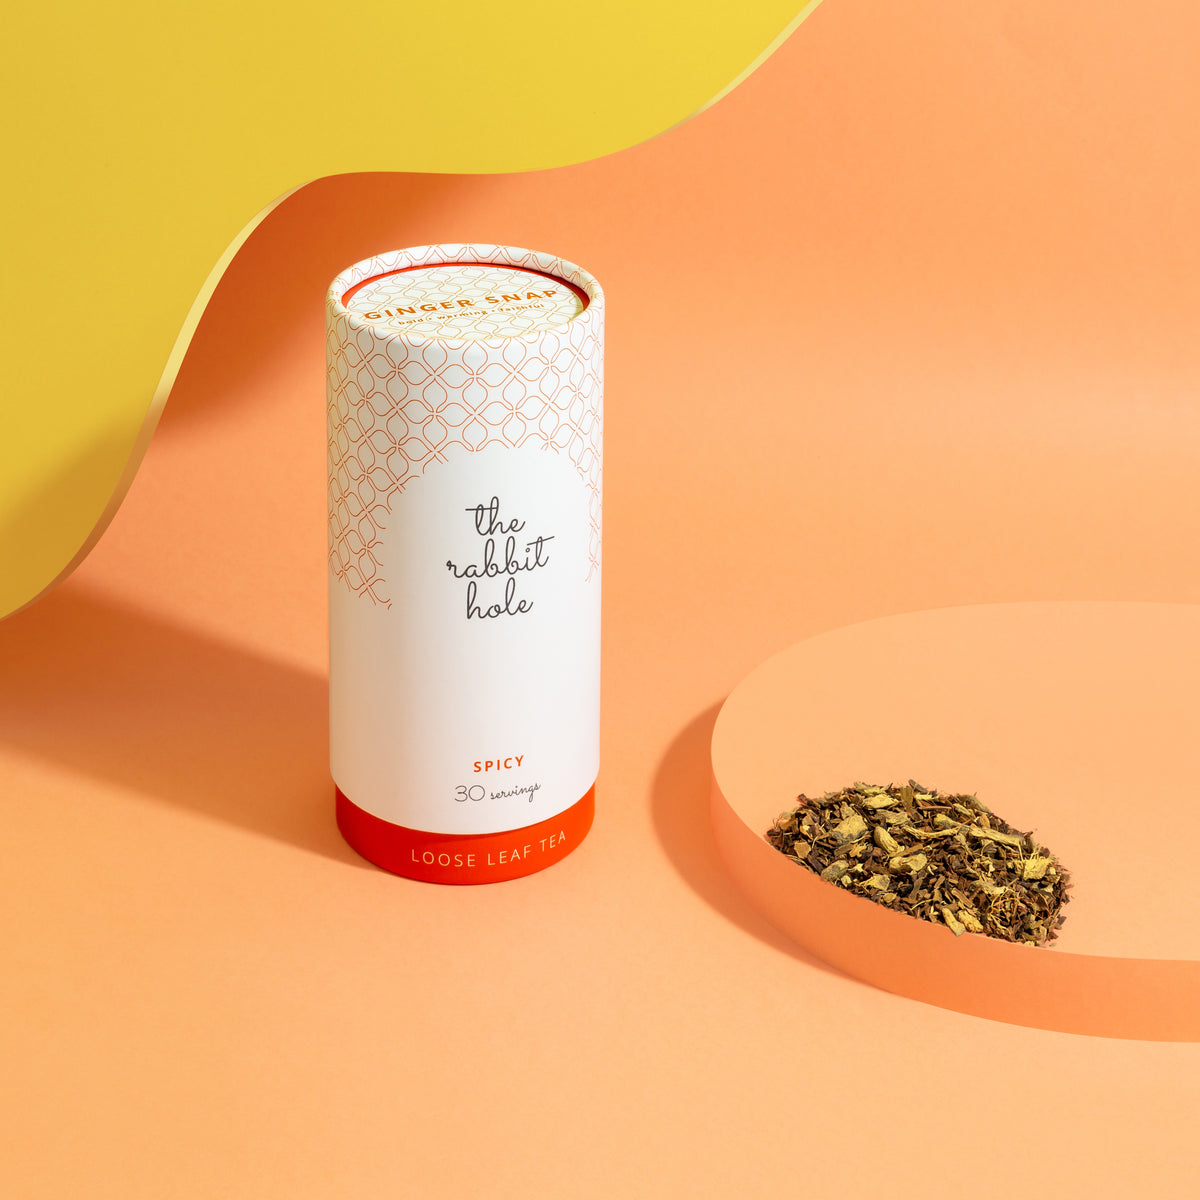 Ginger Snap loose leaf tea by The Rabbit Hole - Australian Made Tea. Tea canister on colourful orange background